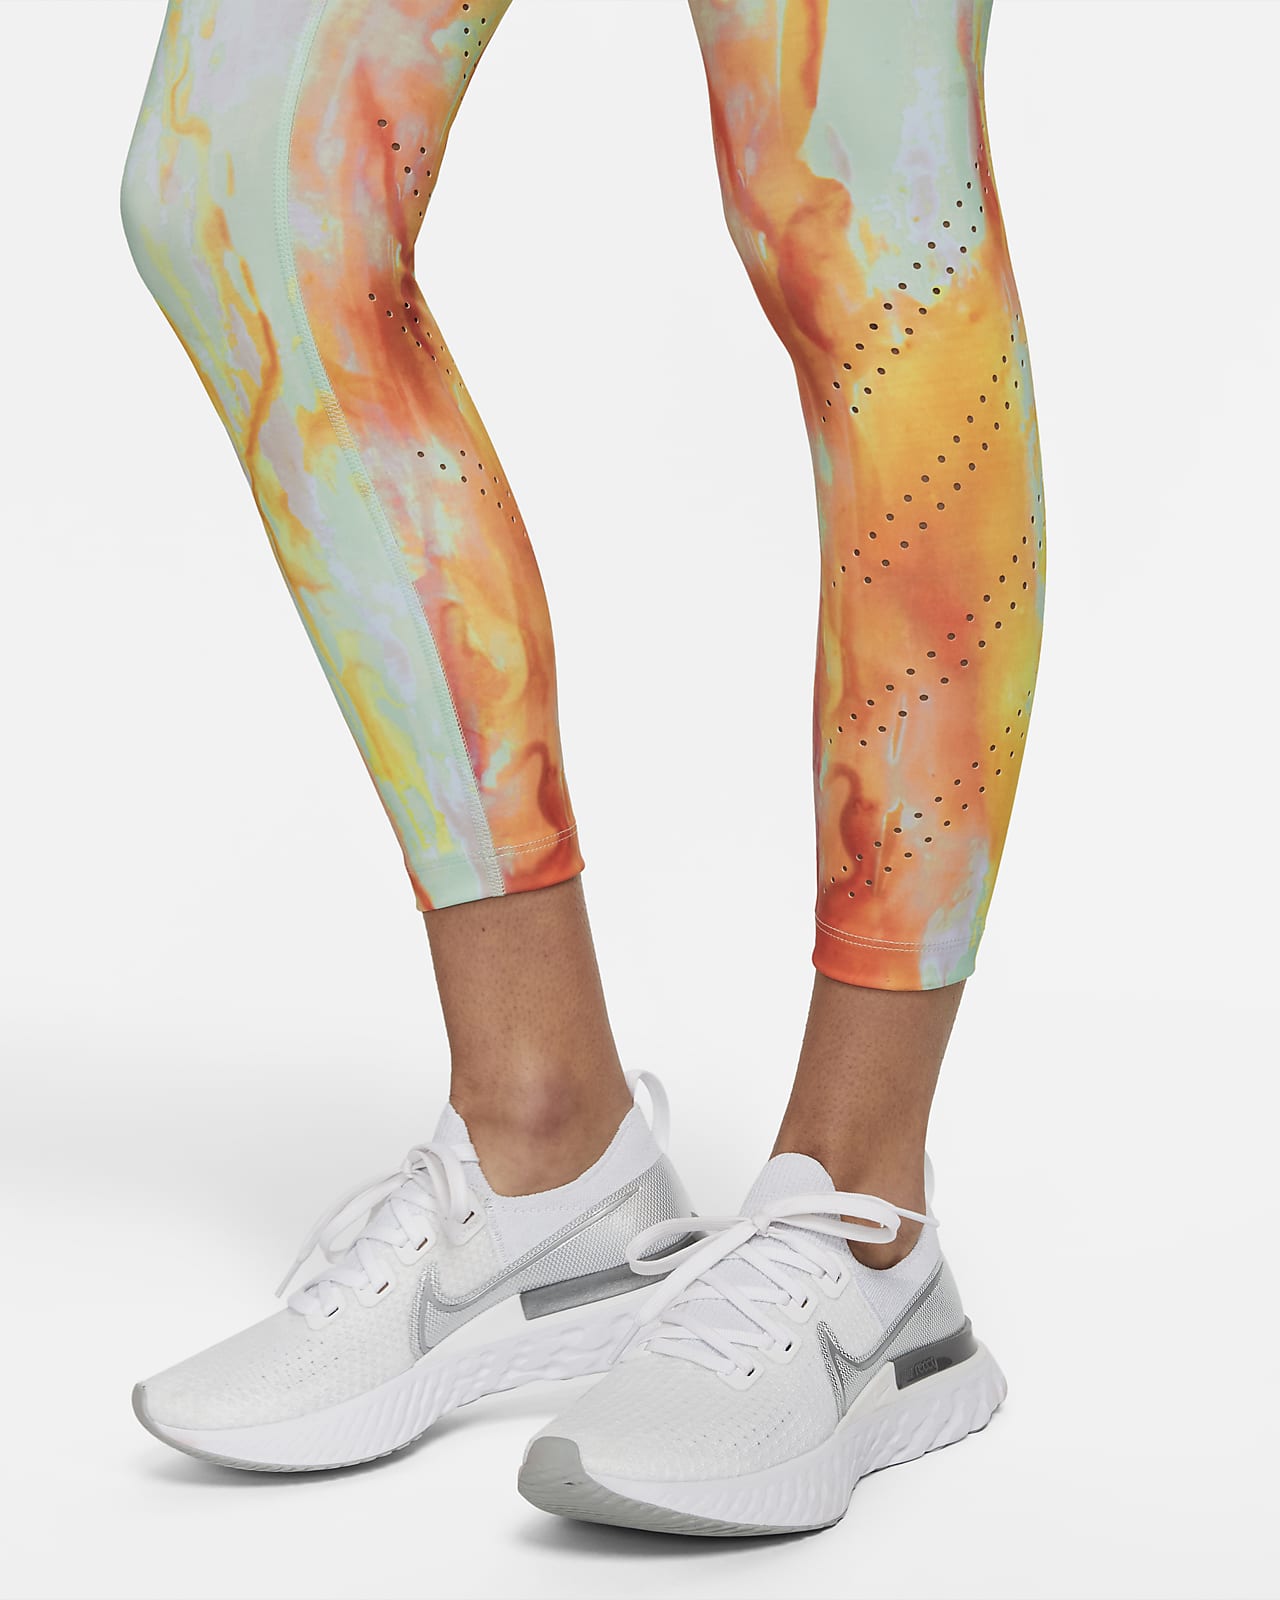 Nike Womens XS Leggings Black Gold Metallic Floral Mid Rise Running BV5769